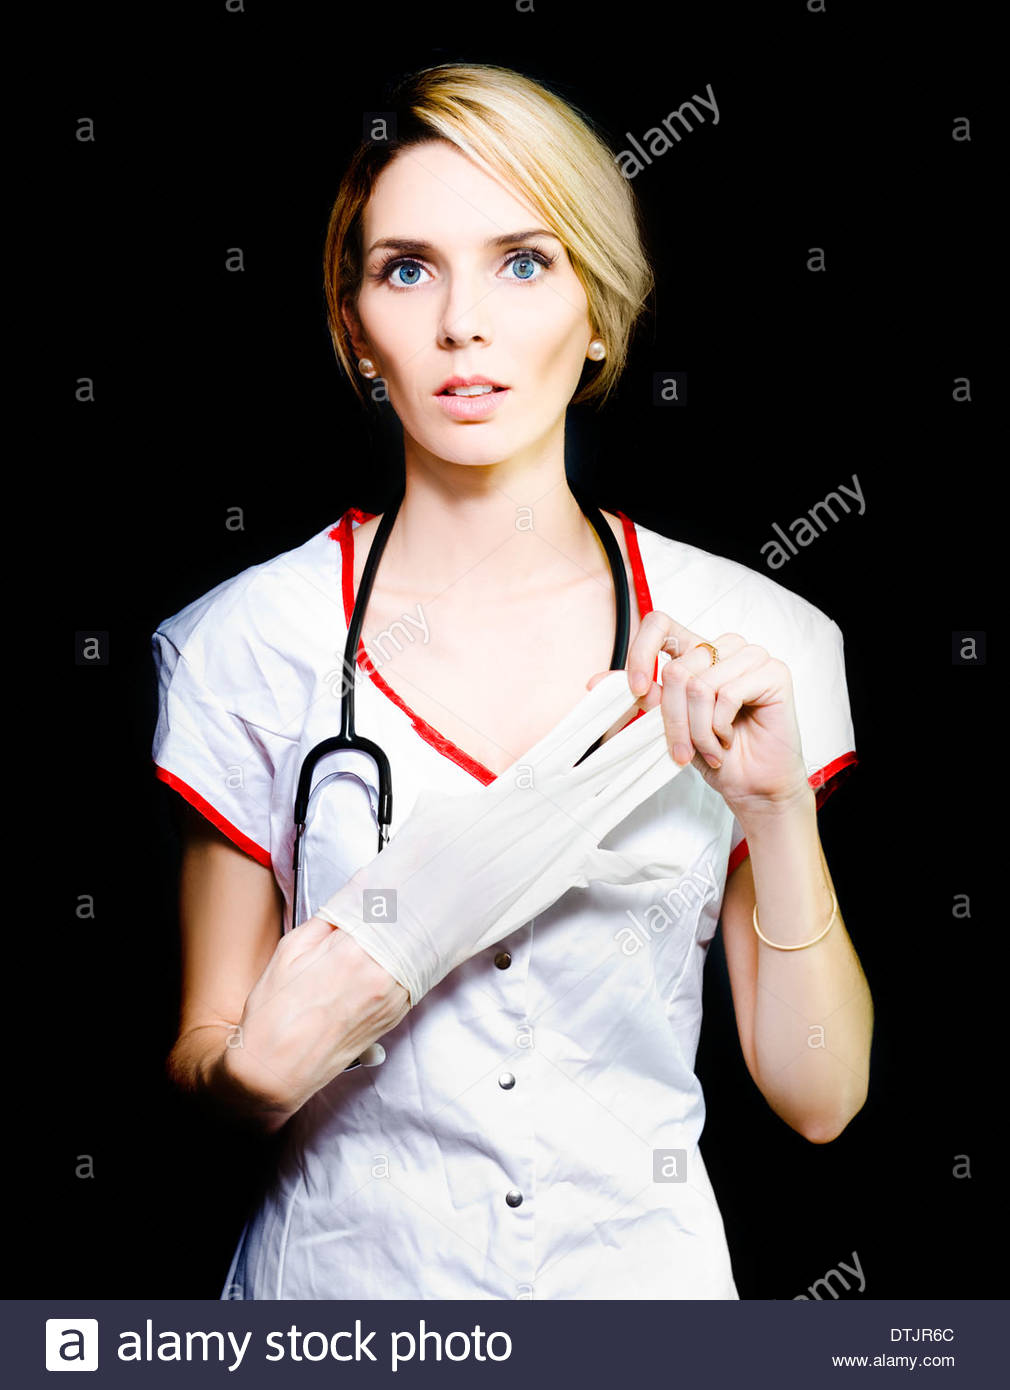 Latex Glove Nurse 113